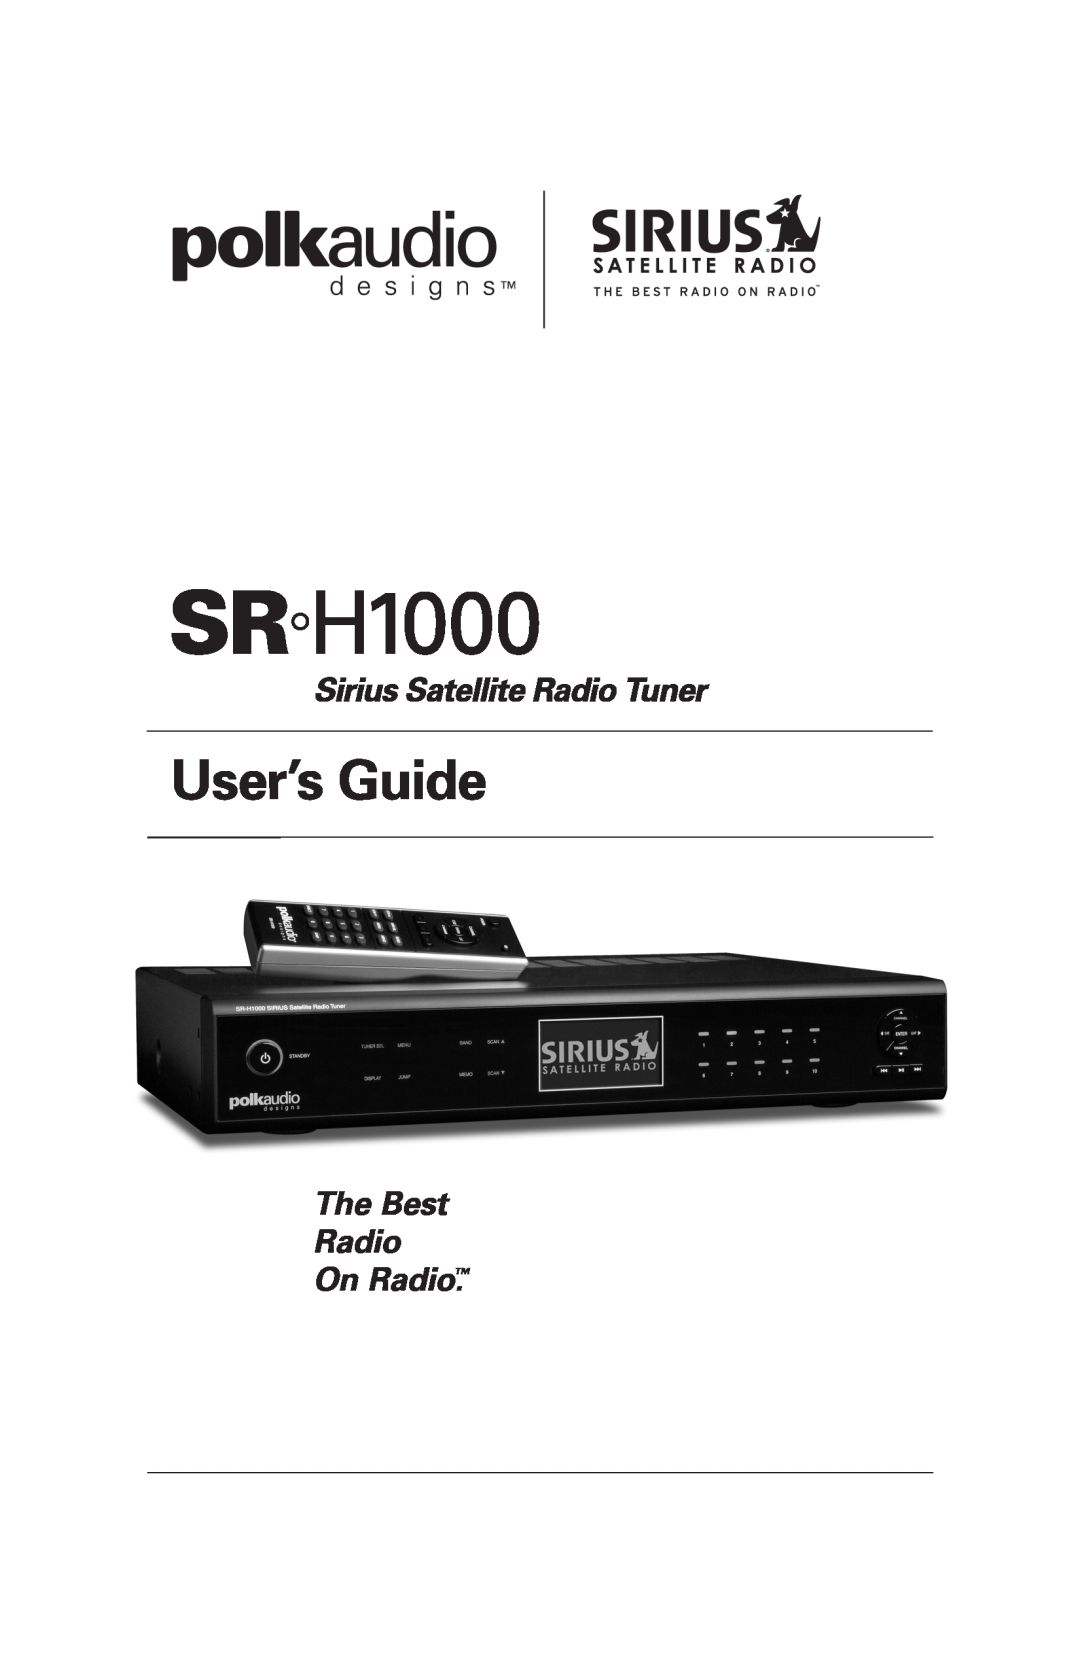 Sirius Satellite Radio SRH1000 manual User’s Guide, The Best Radio On Radio 